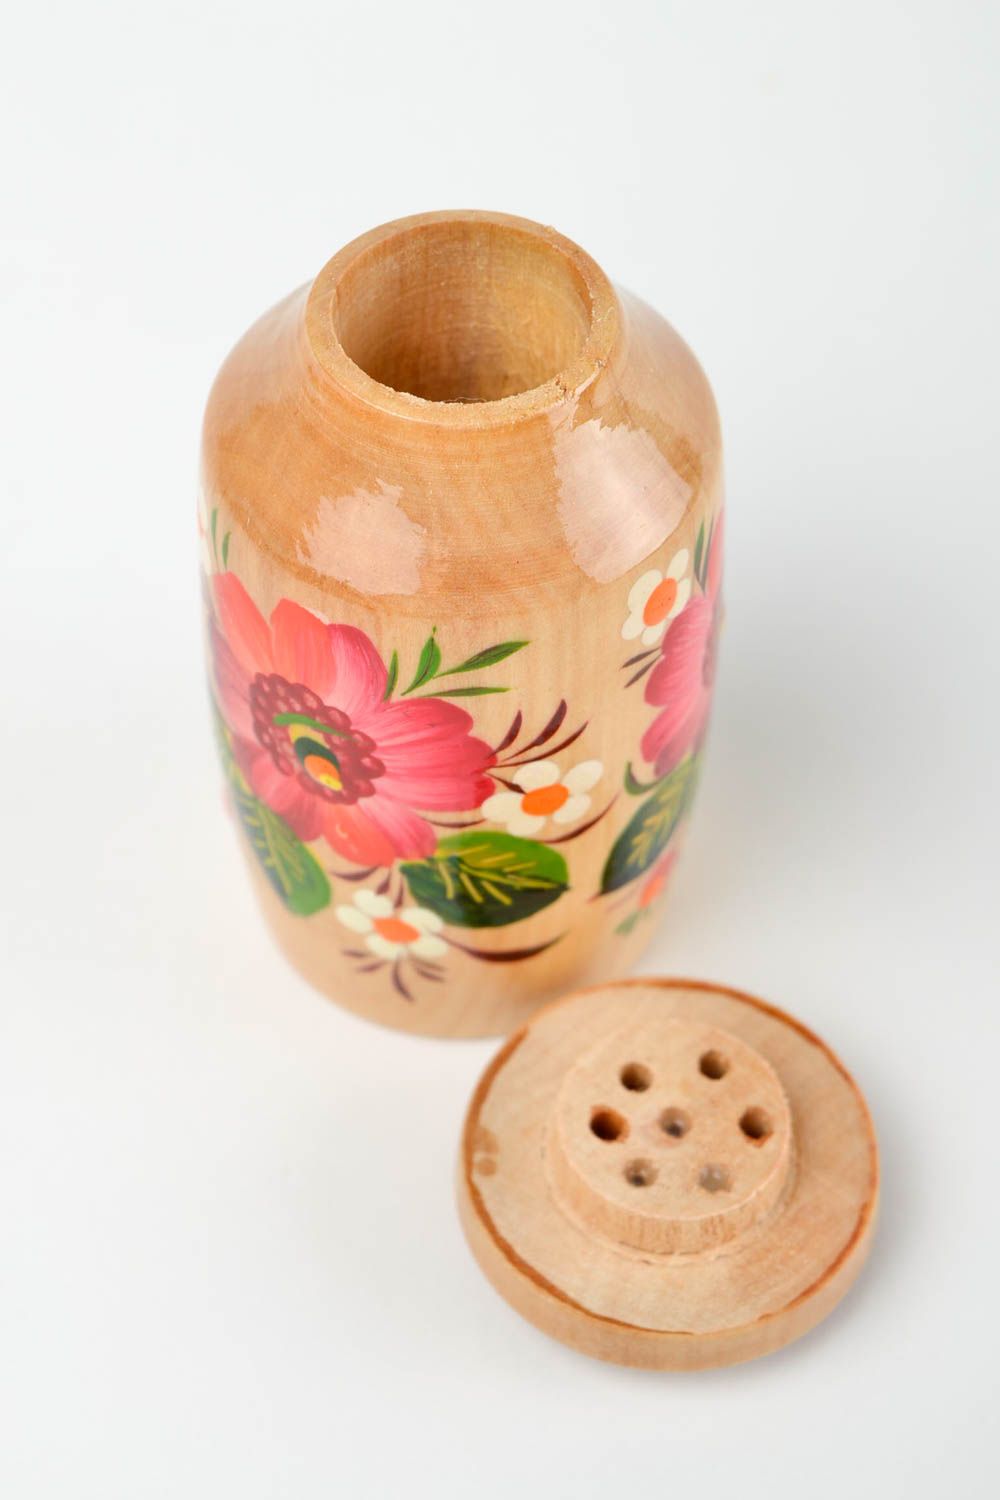 Unusual handmade wooden salt shaker table decor ideas table setting small gifts photo 5